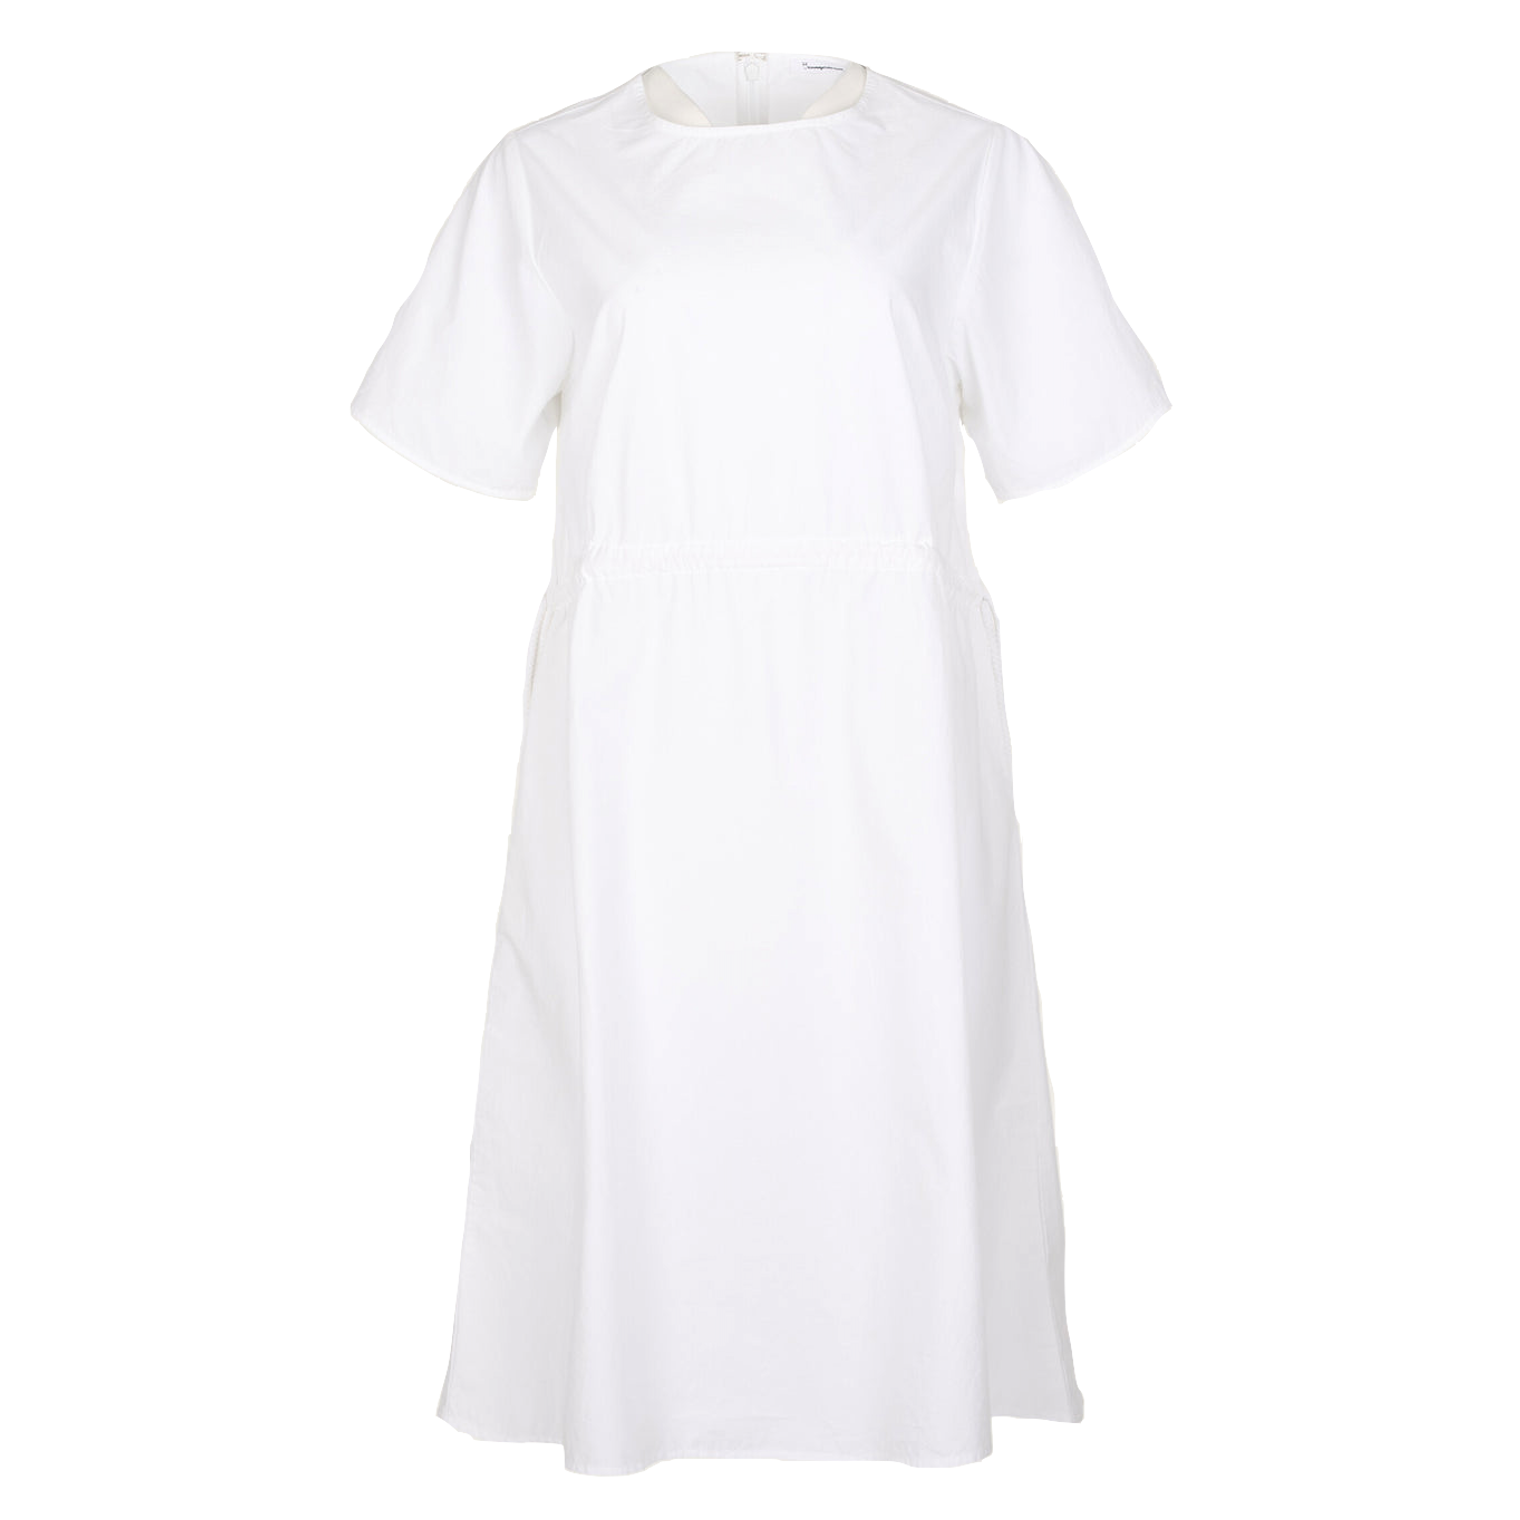 KnowledgeCotton Apparel KnowledgeCotton, Poplin O-Neck ss Dress, bright white, S